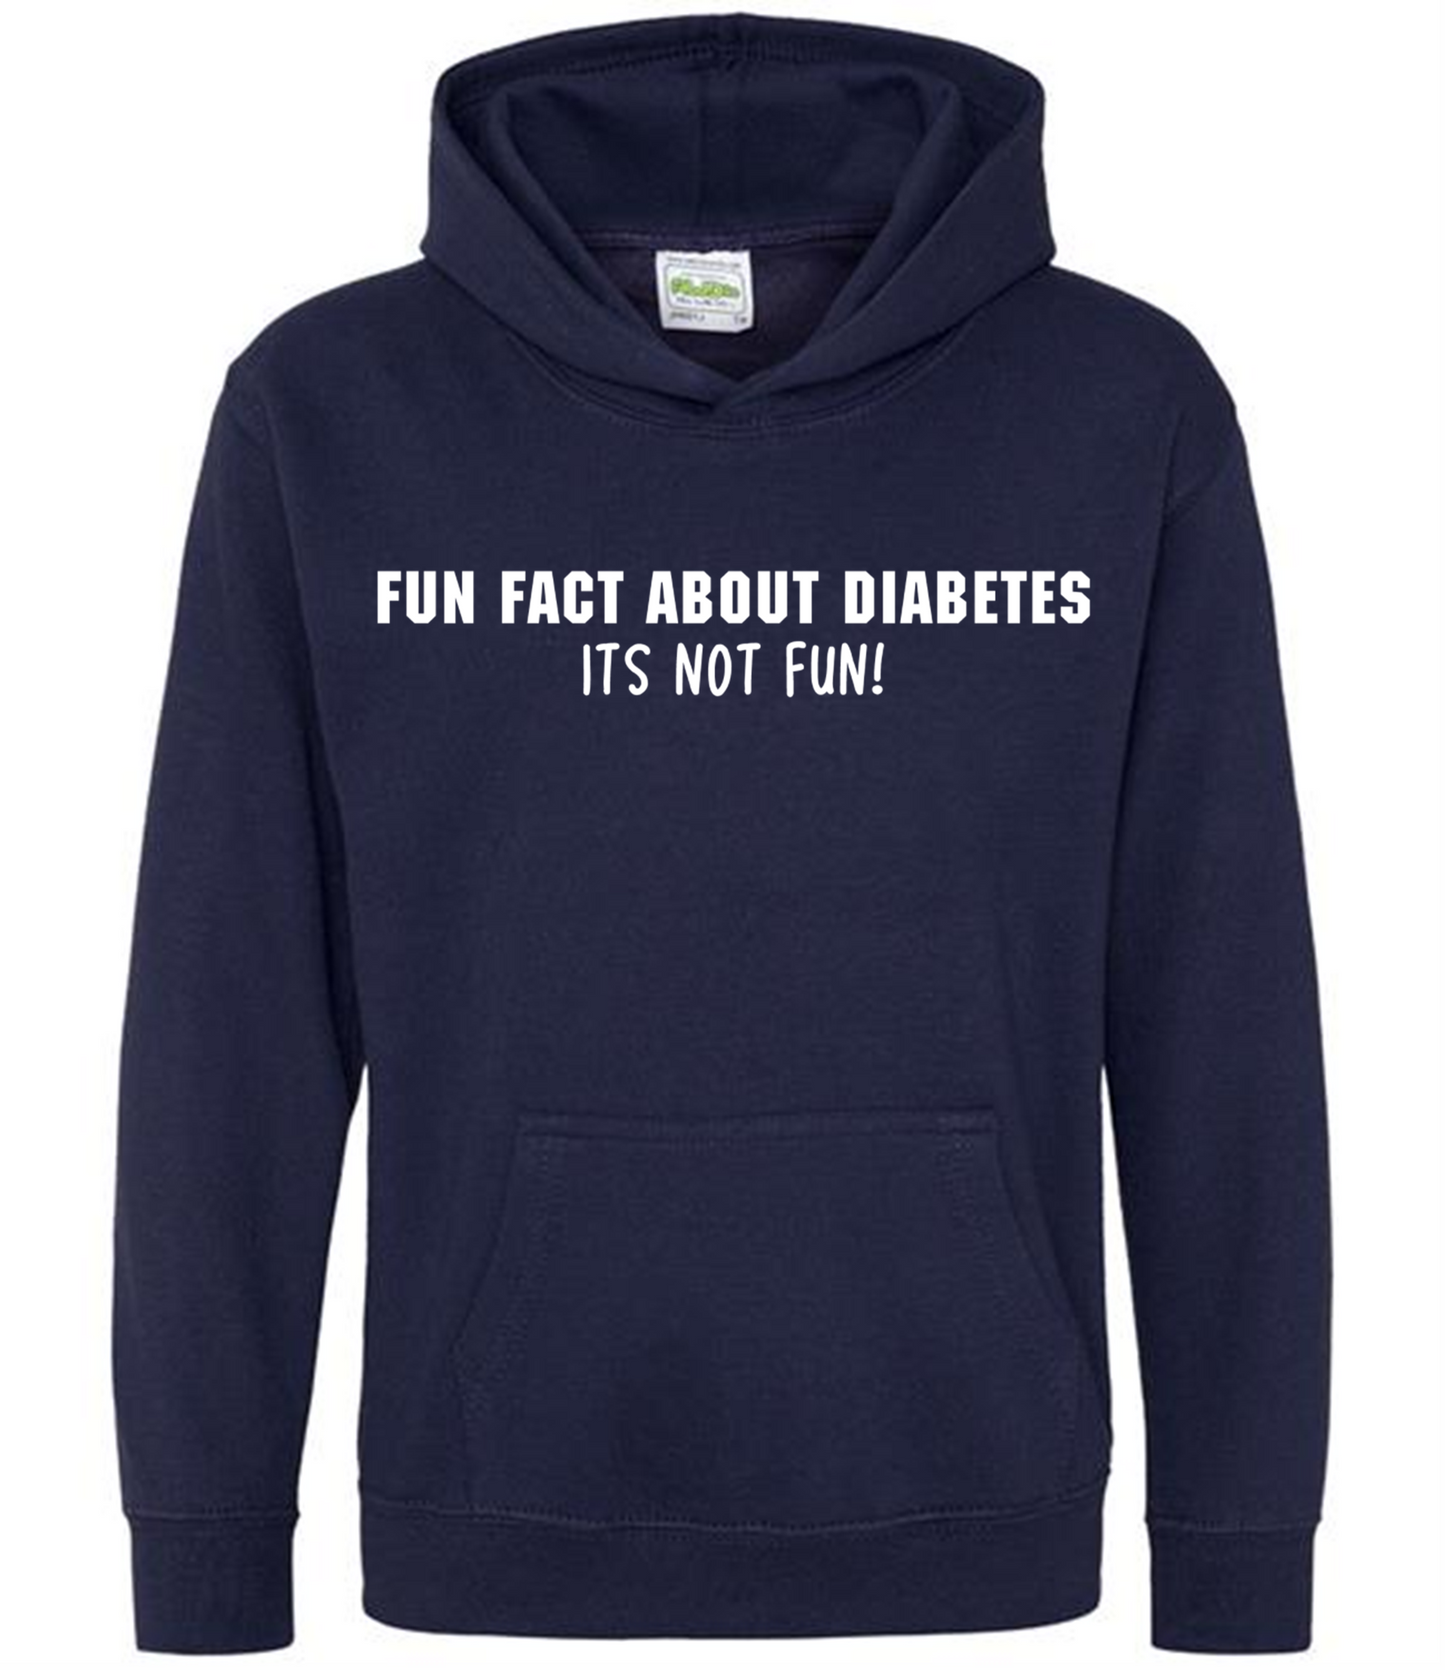 Fun Fact About Diabetes, Its Not Fun Kids Hoodie